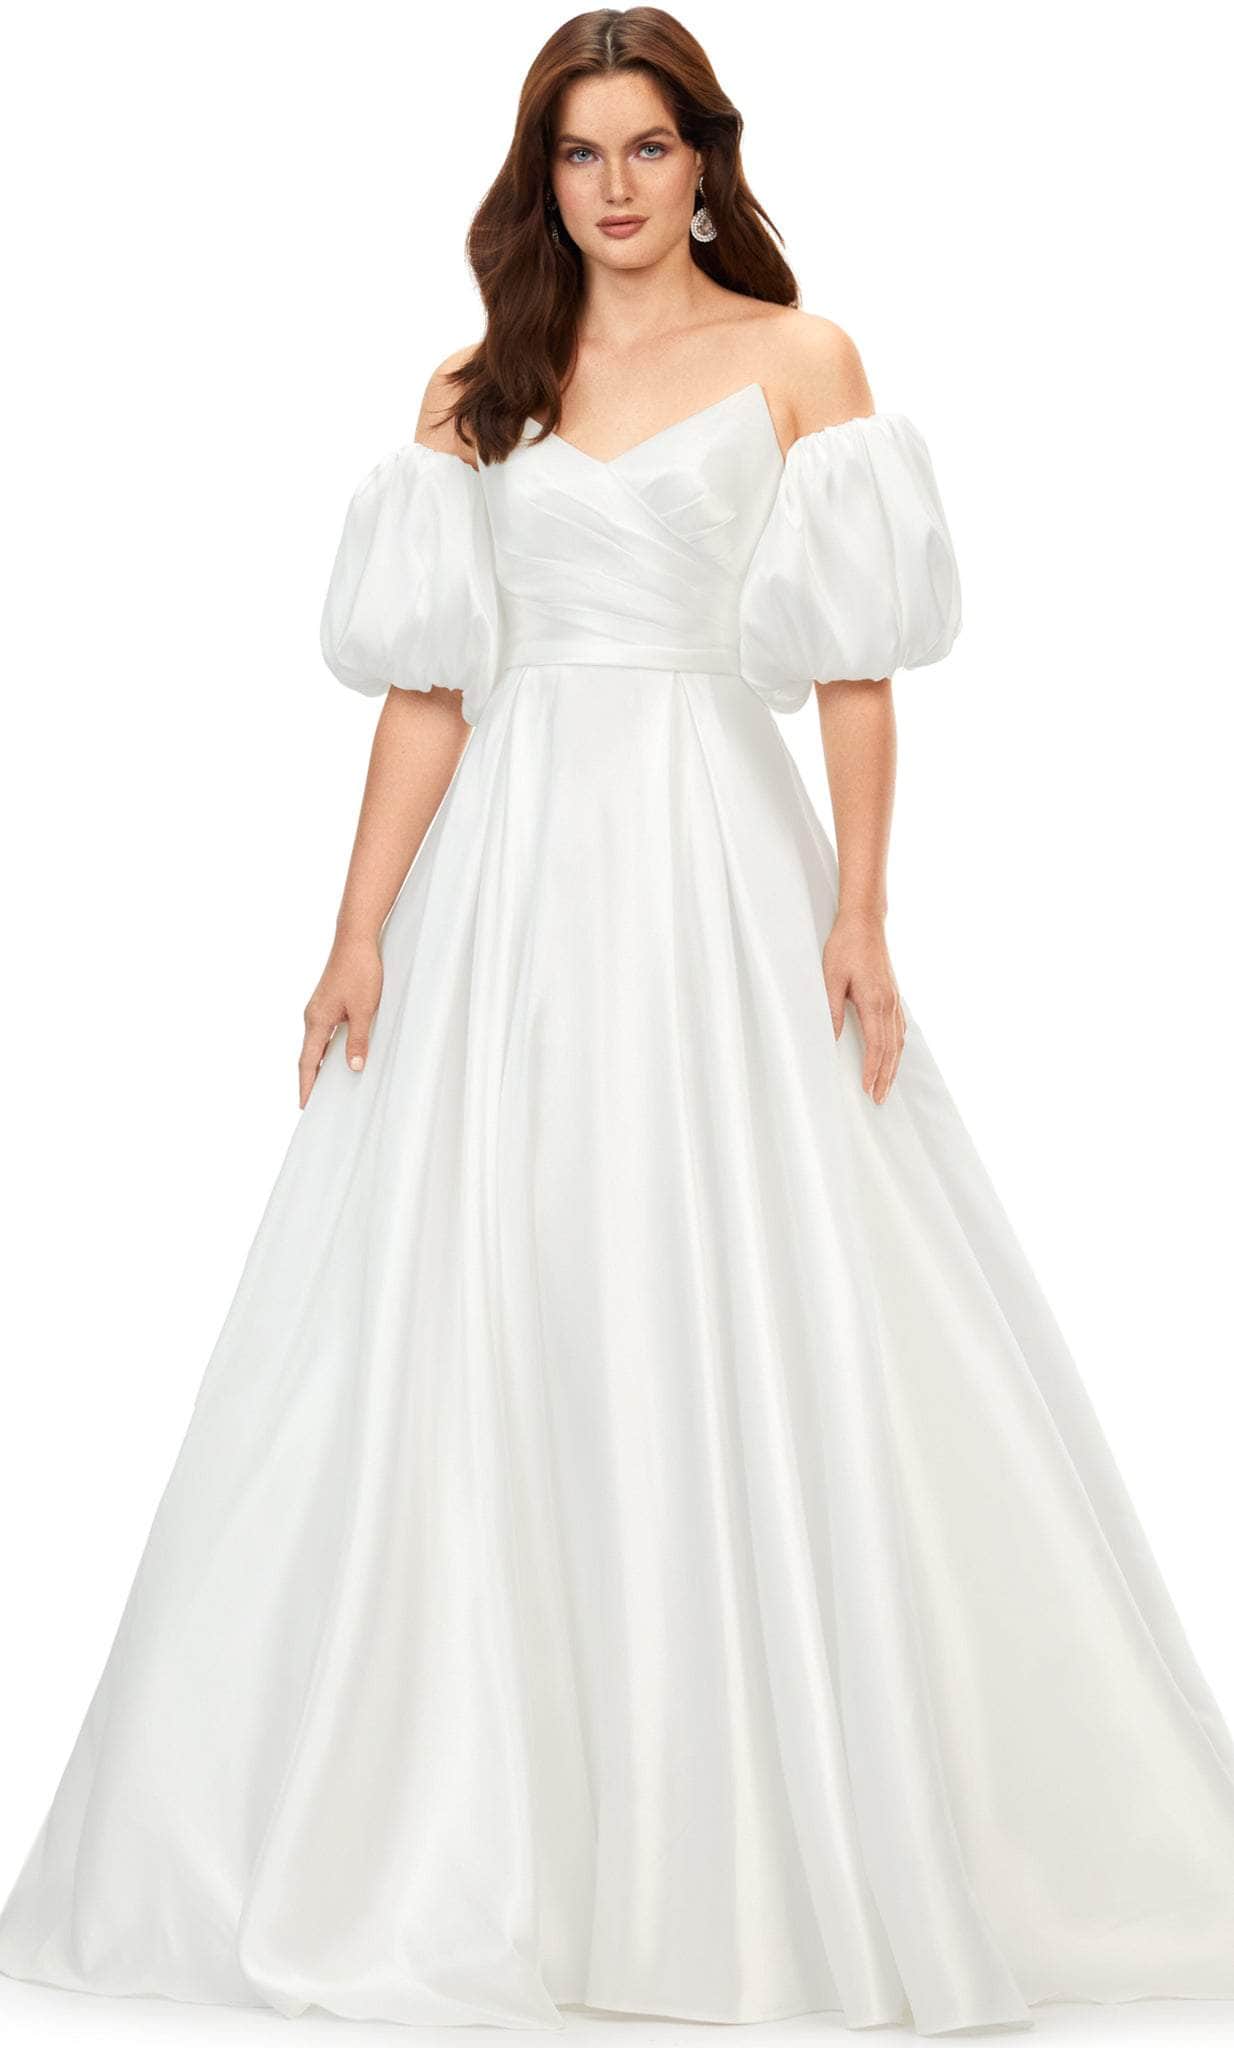 Image of Ashley Lauren 11323 - Phantom Satin Bridal Gown